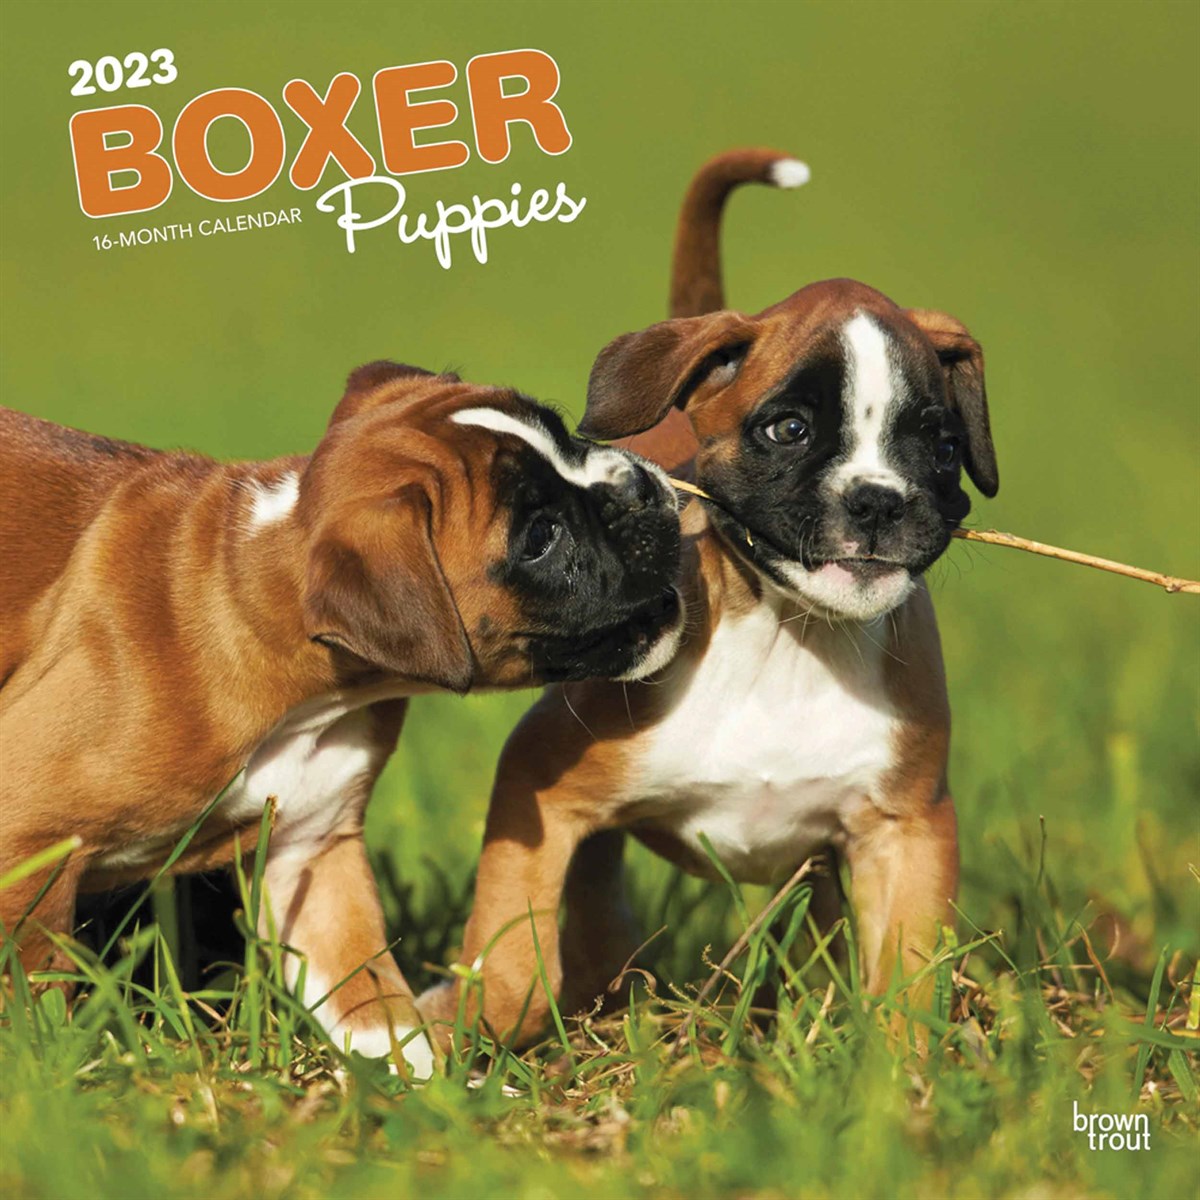 Just Boxer Puppies 2023 Calendars